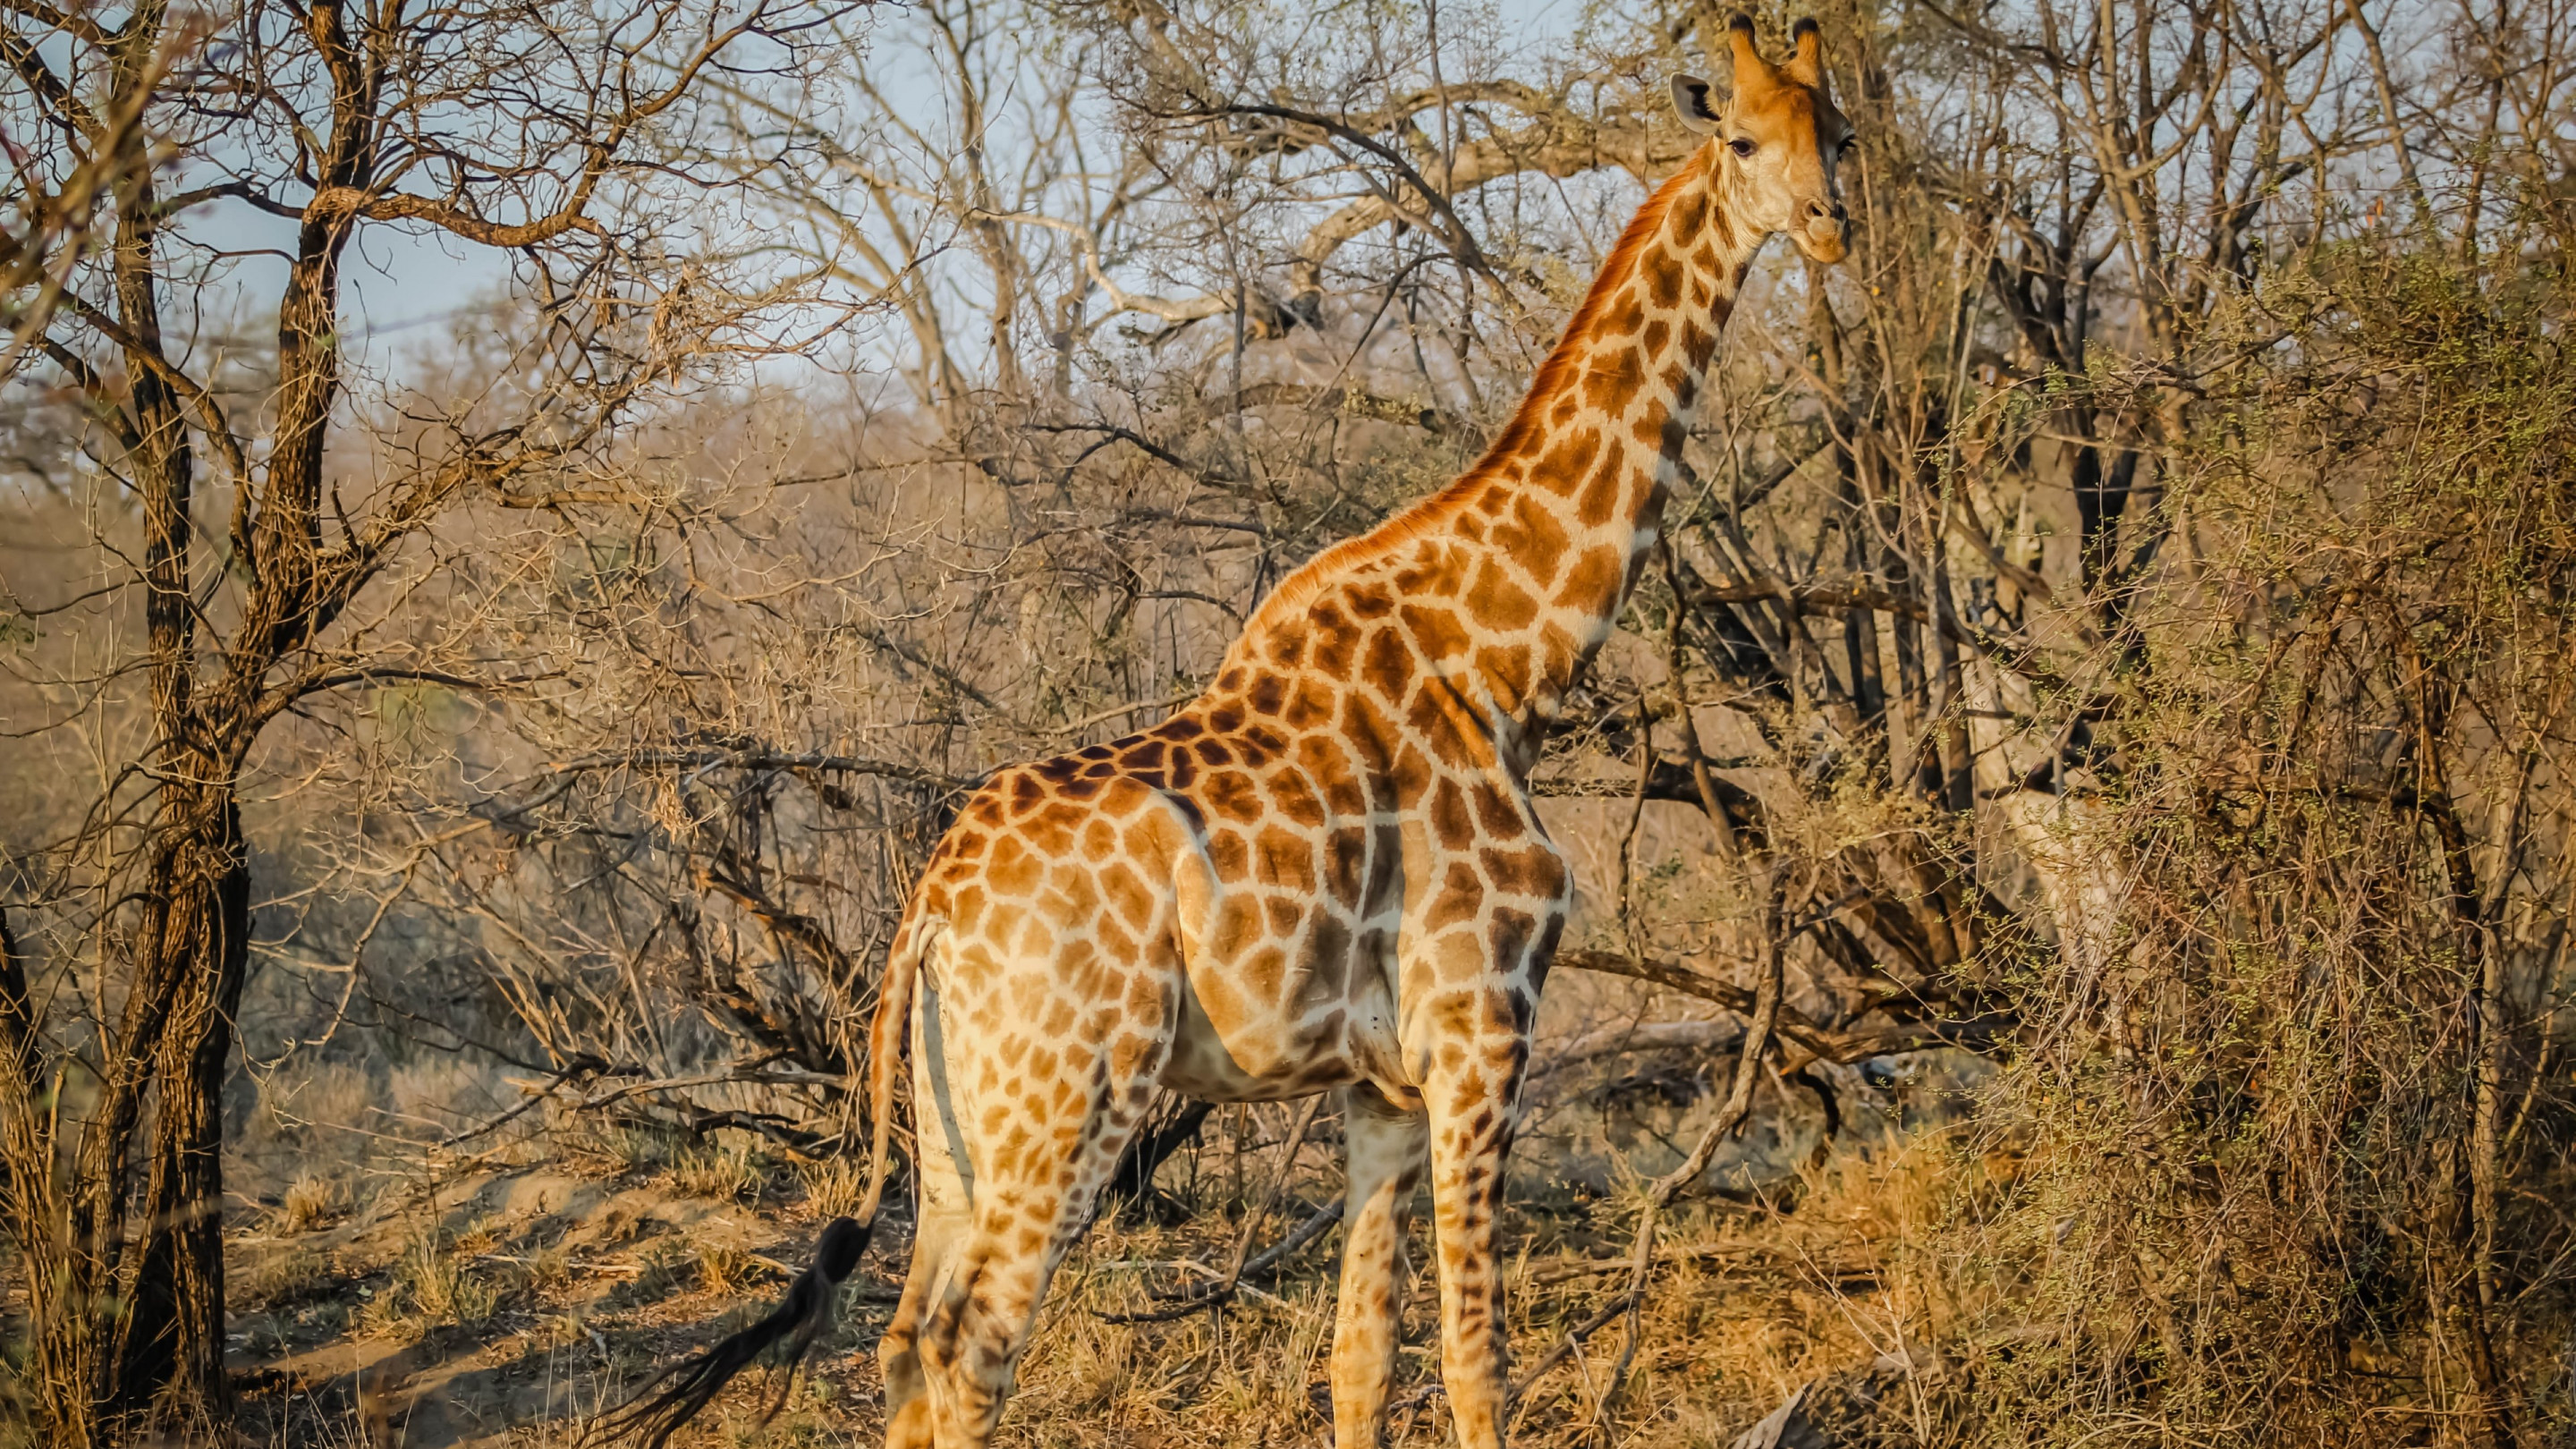 Wild giraffe in African safari wallpaper 2880x1620